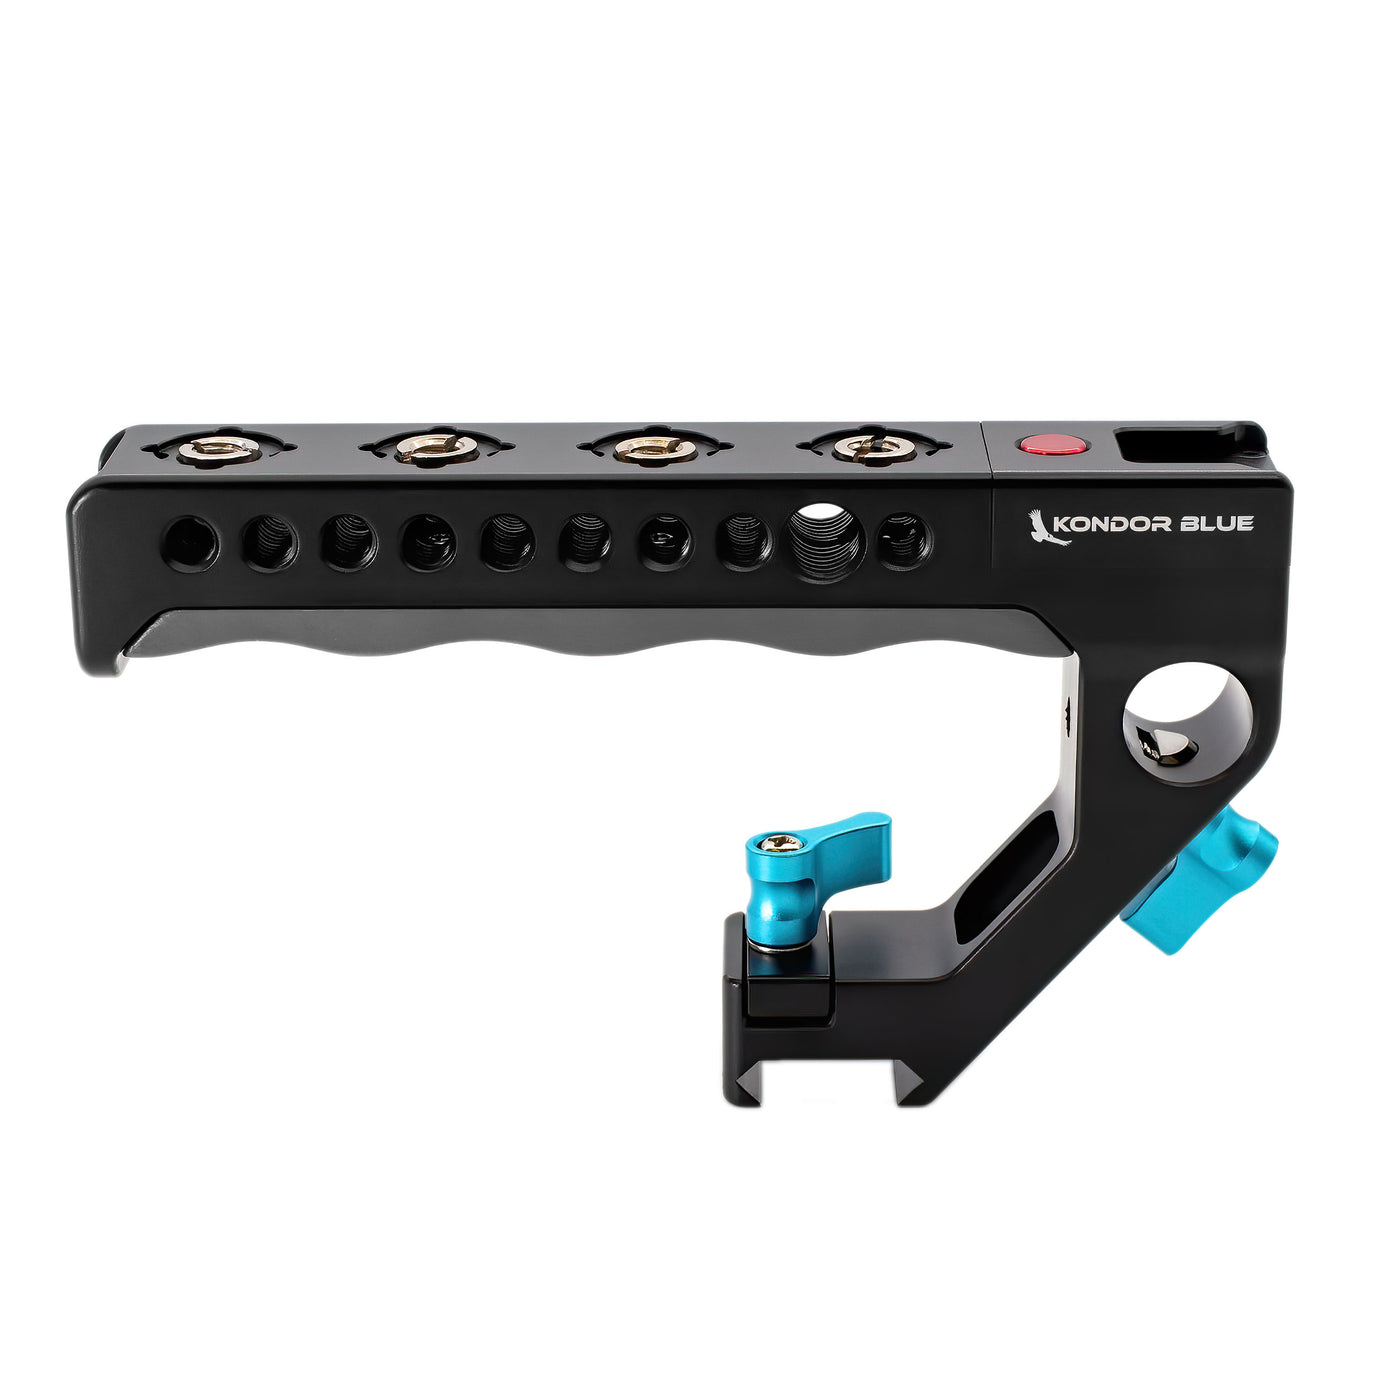 Remote Trigger Top Handle for EOS R5, RED KOMODO, Fuji, Z CAM, URSA, C300, C70, Sony A7, LUMIX (Start/Stop Trigger)